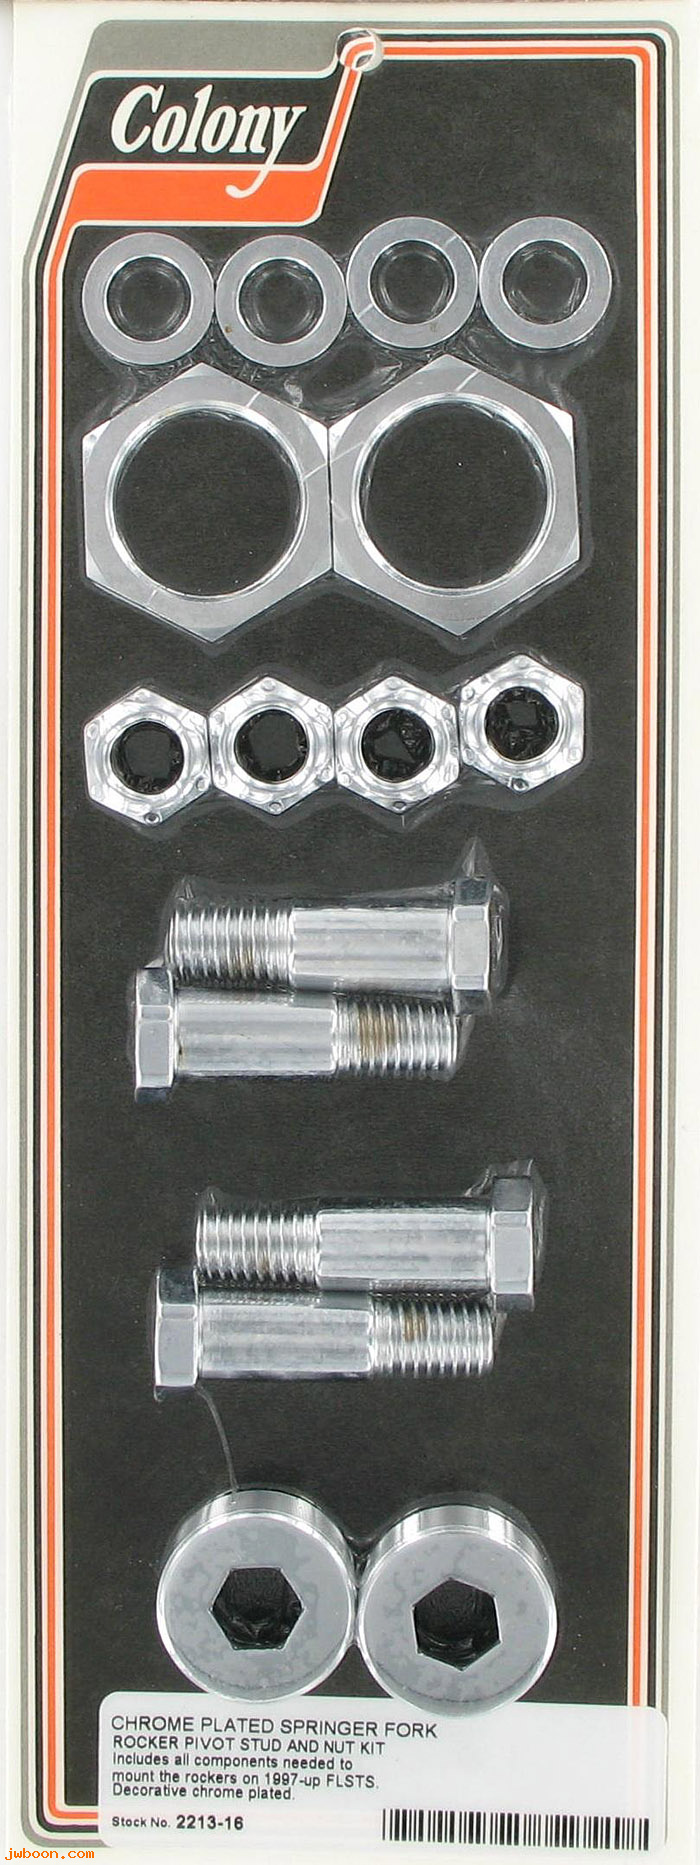 C 2213-16 (): Springer fork rocker pivot stud & nut kit, in stock - FLSTS '97-